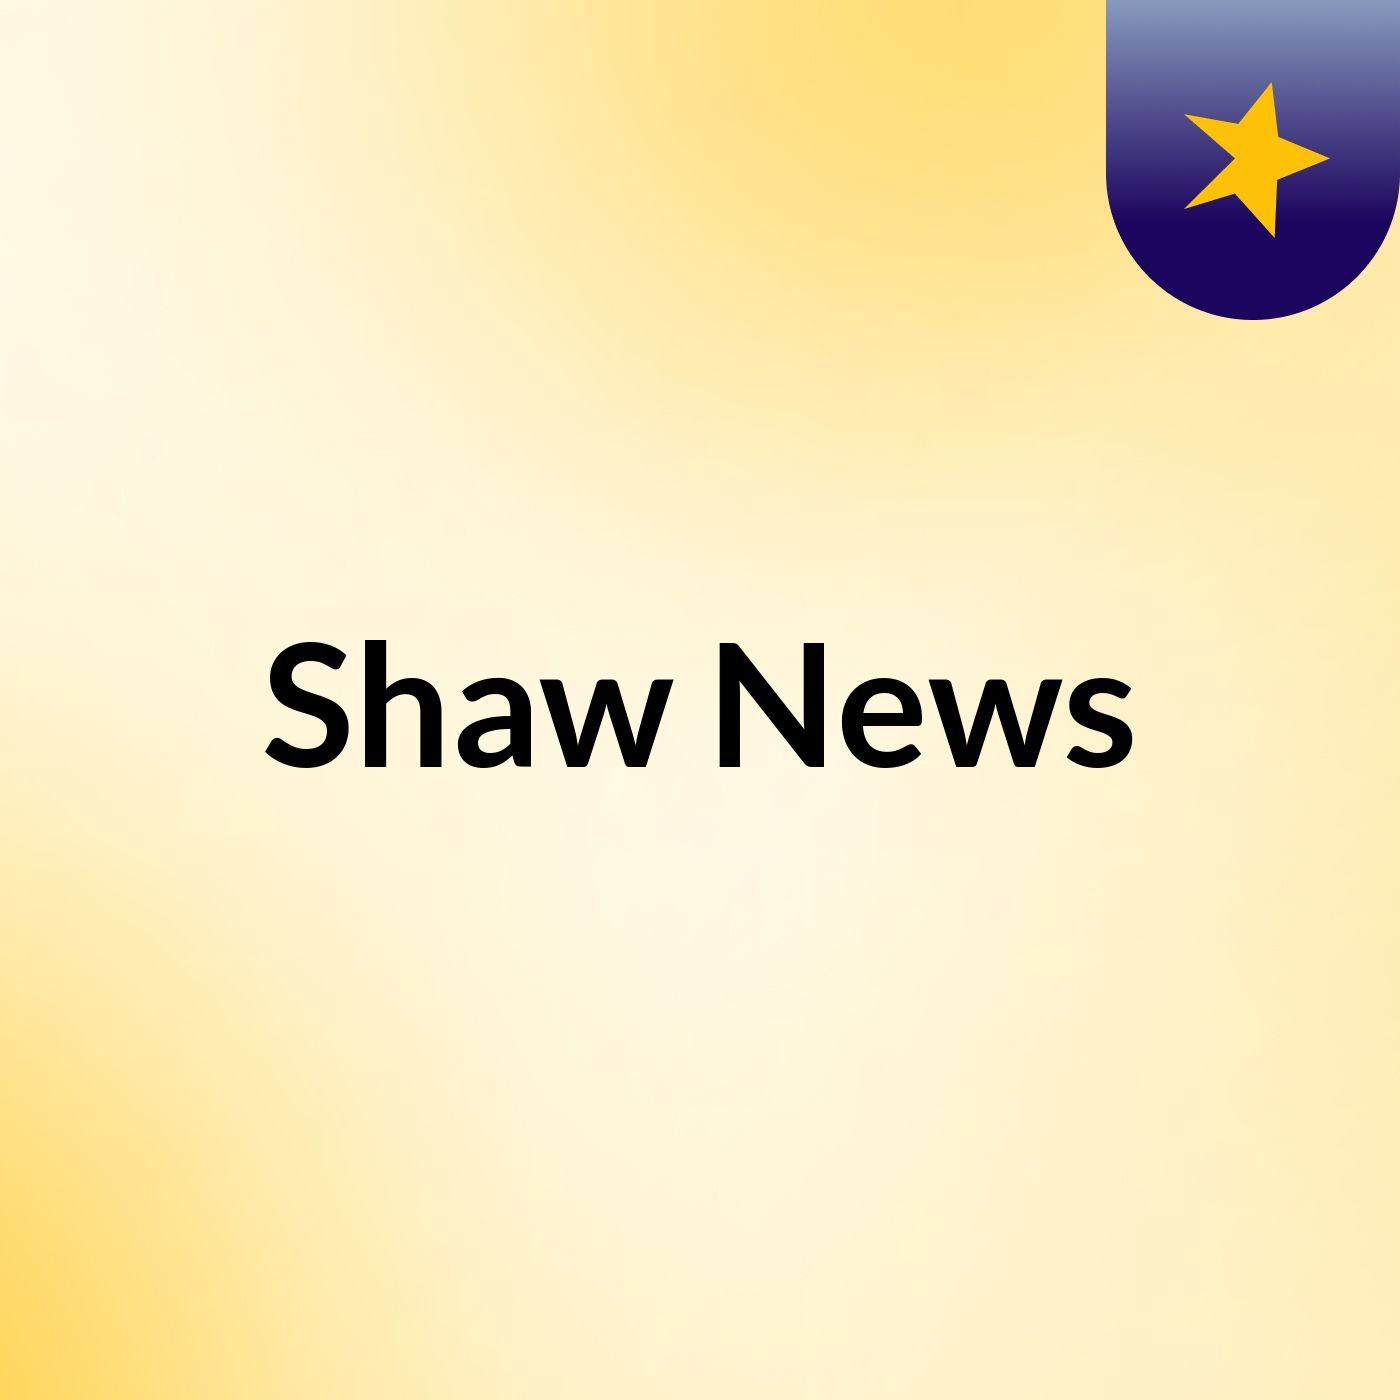 Shaw News